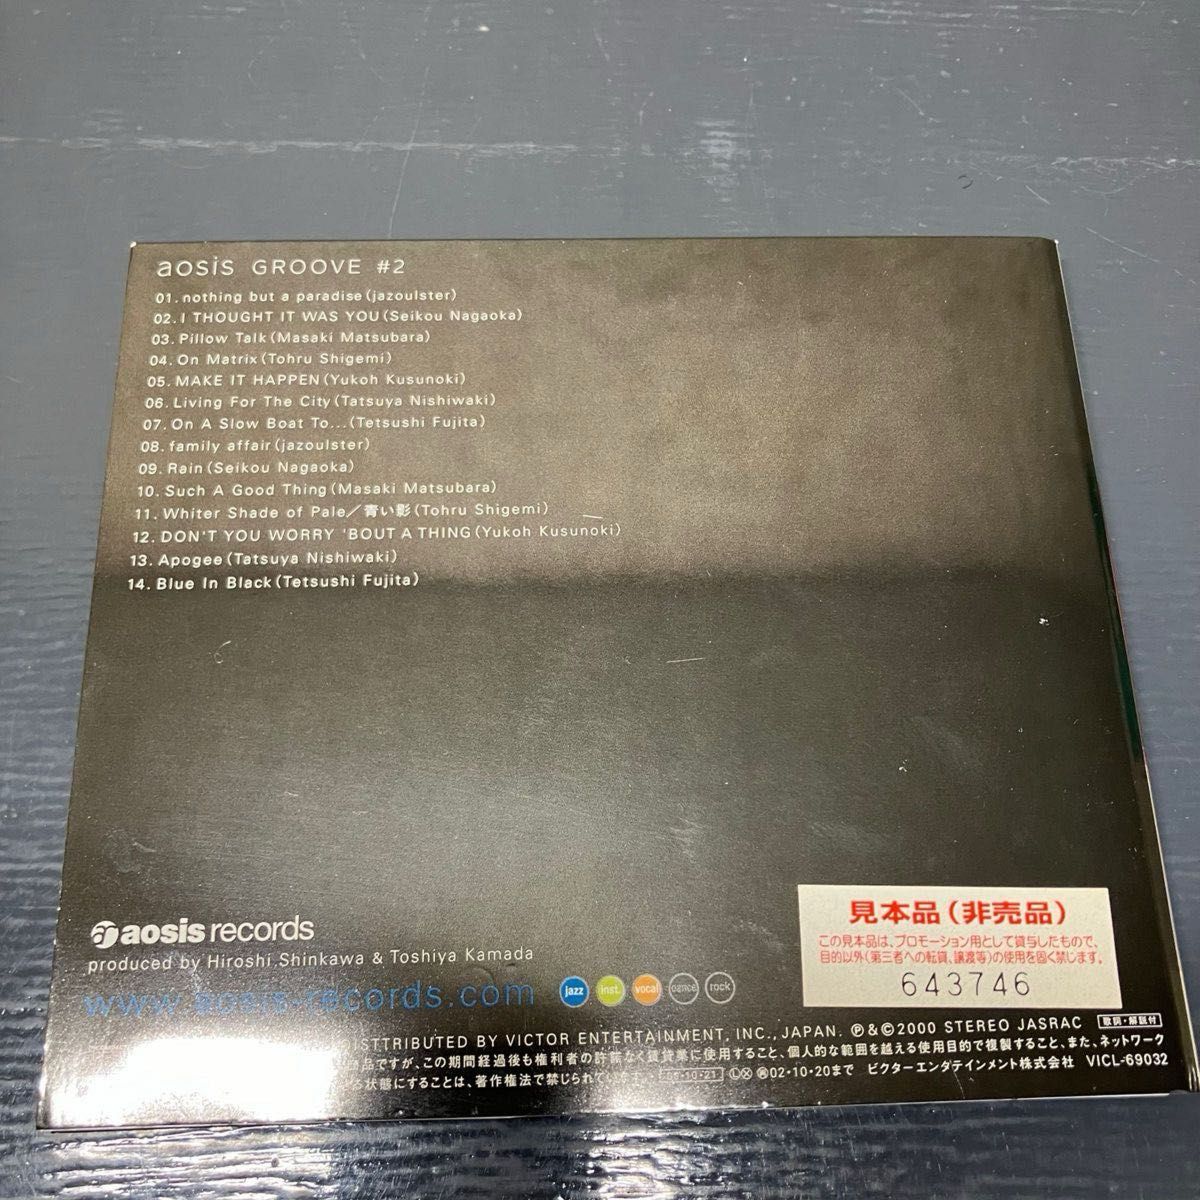 AOSIS GROOVE #2 オムニバス コンピレーション アルバム 音楽CD